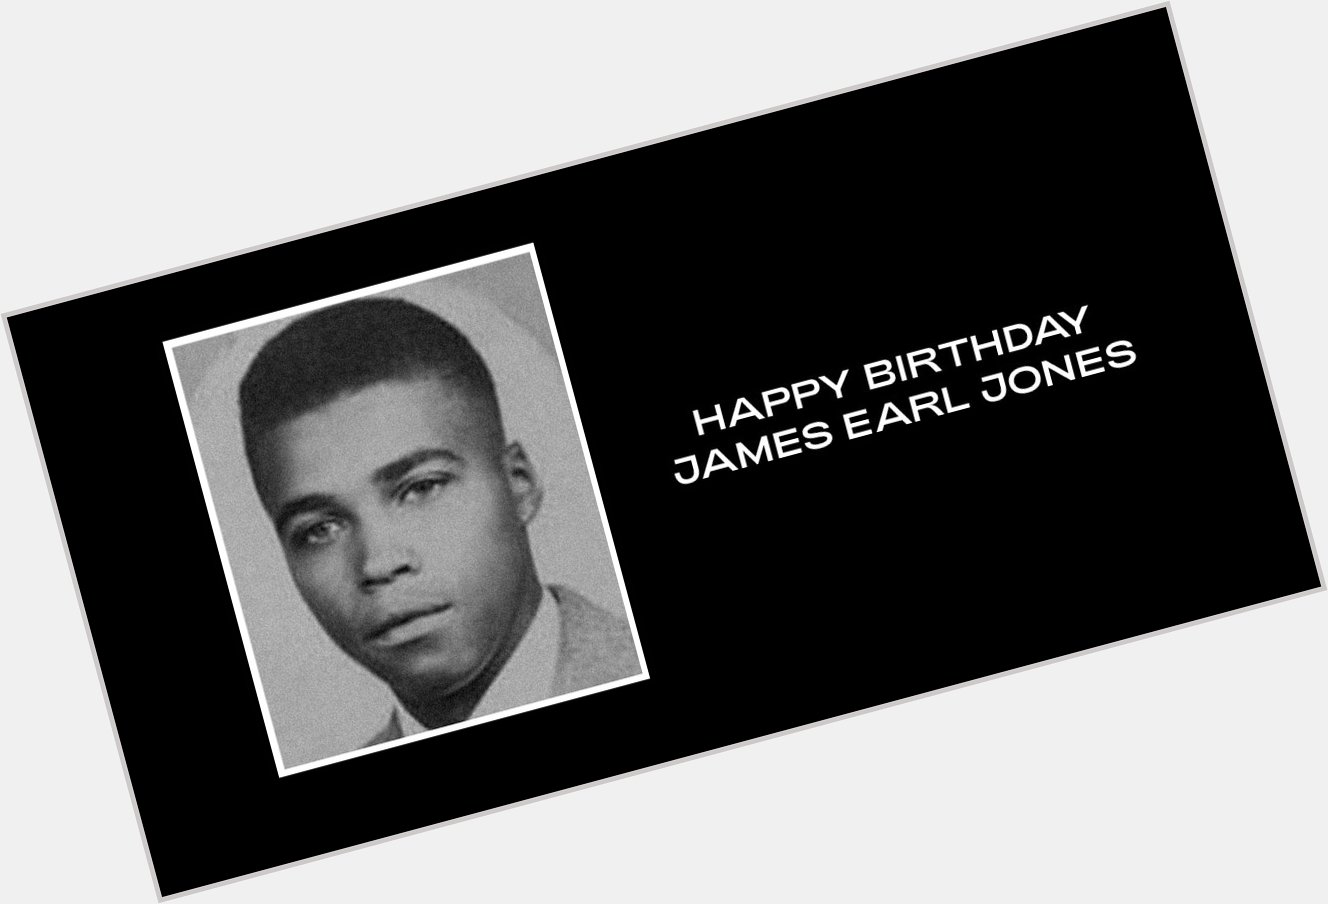 Beyoncé wishes James Earl Jones a happy 91st birthday. 